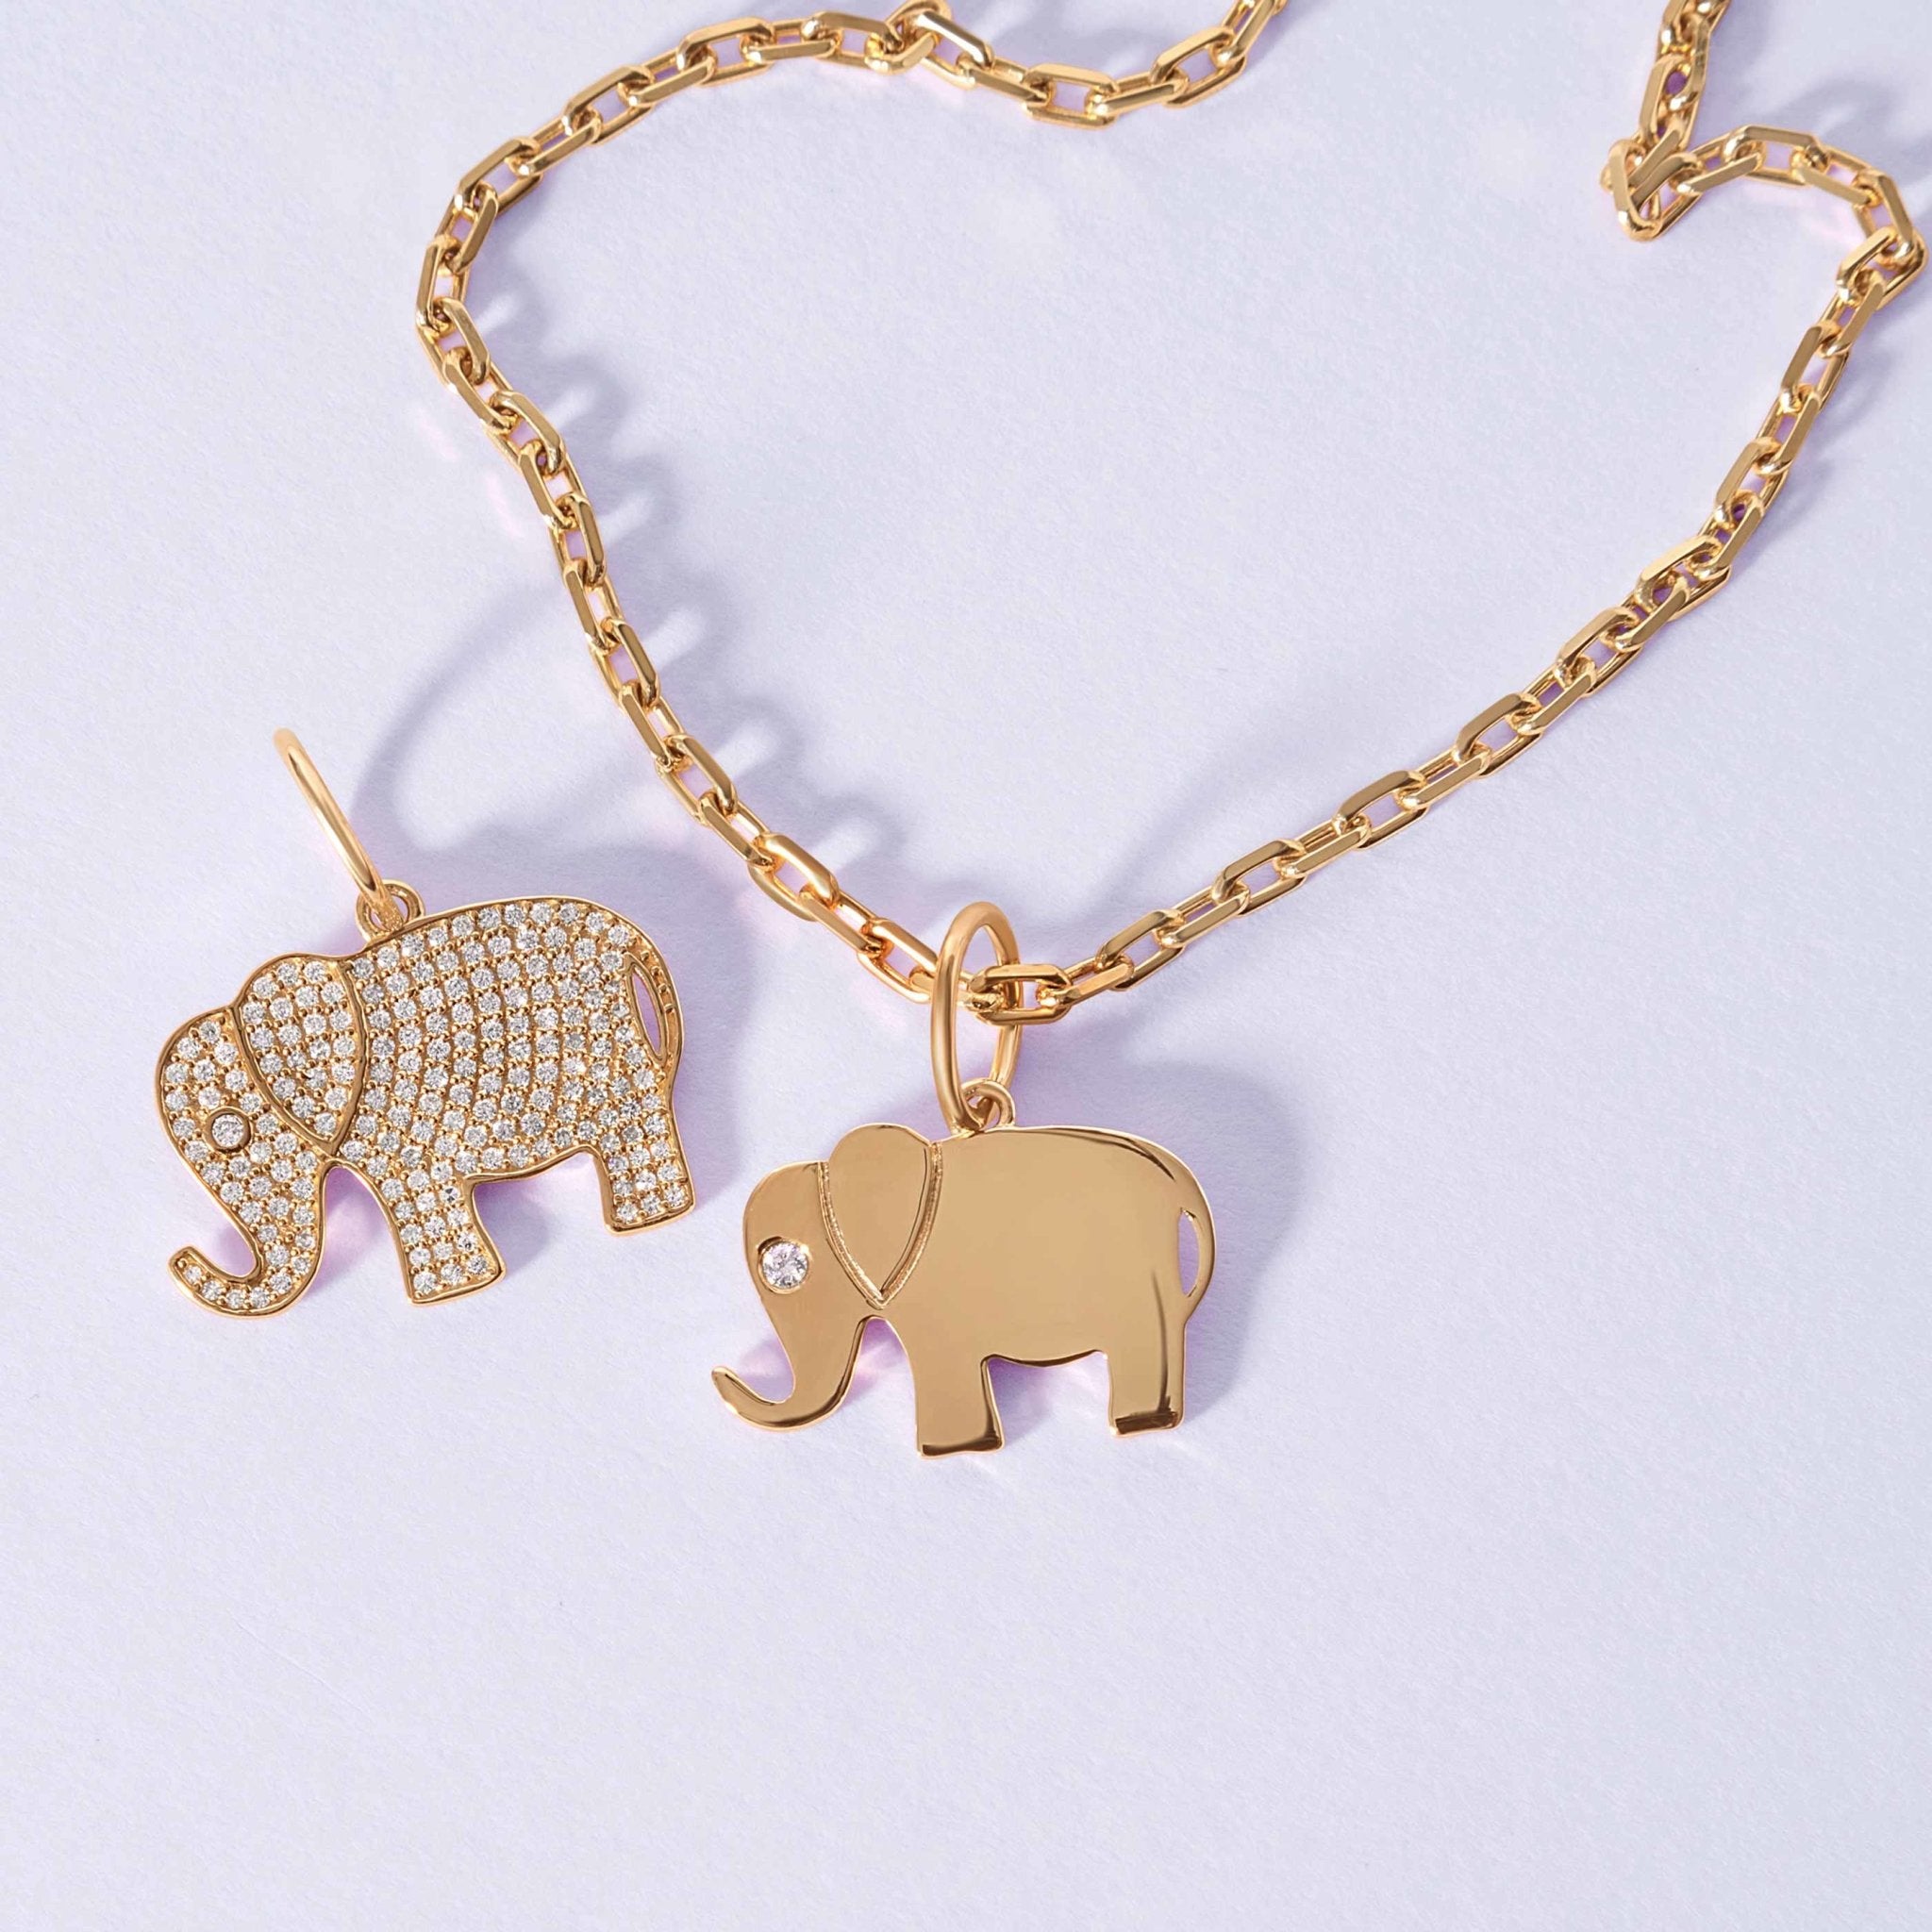 Cute elephant charm Sterling silver pendant earring set at ₹2550 | Azilaa